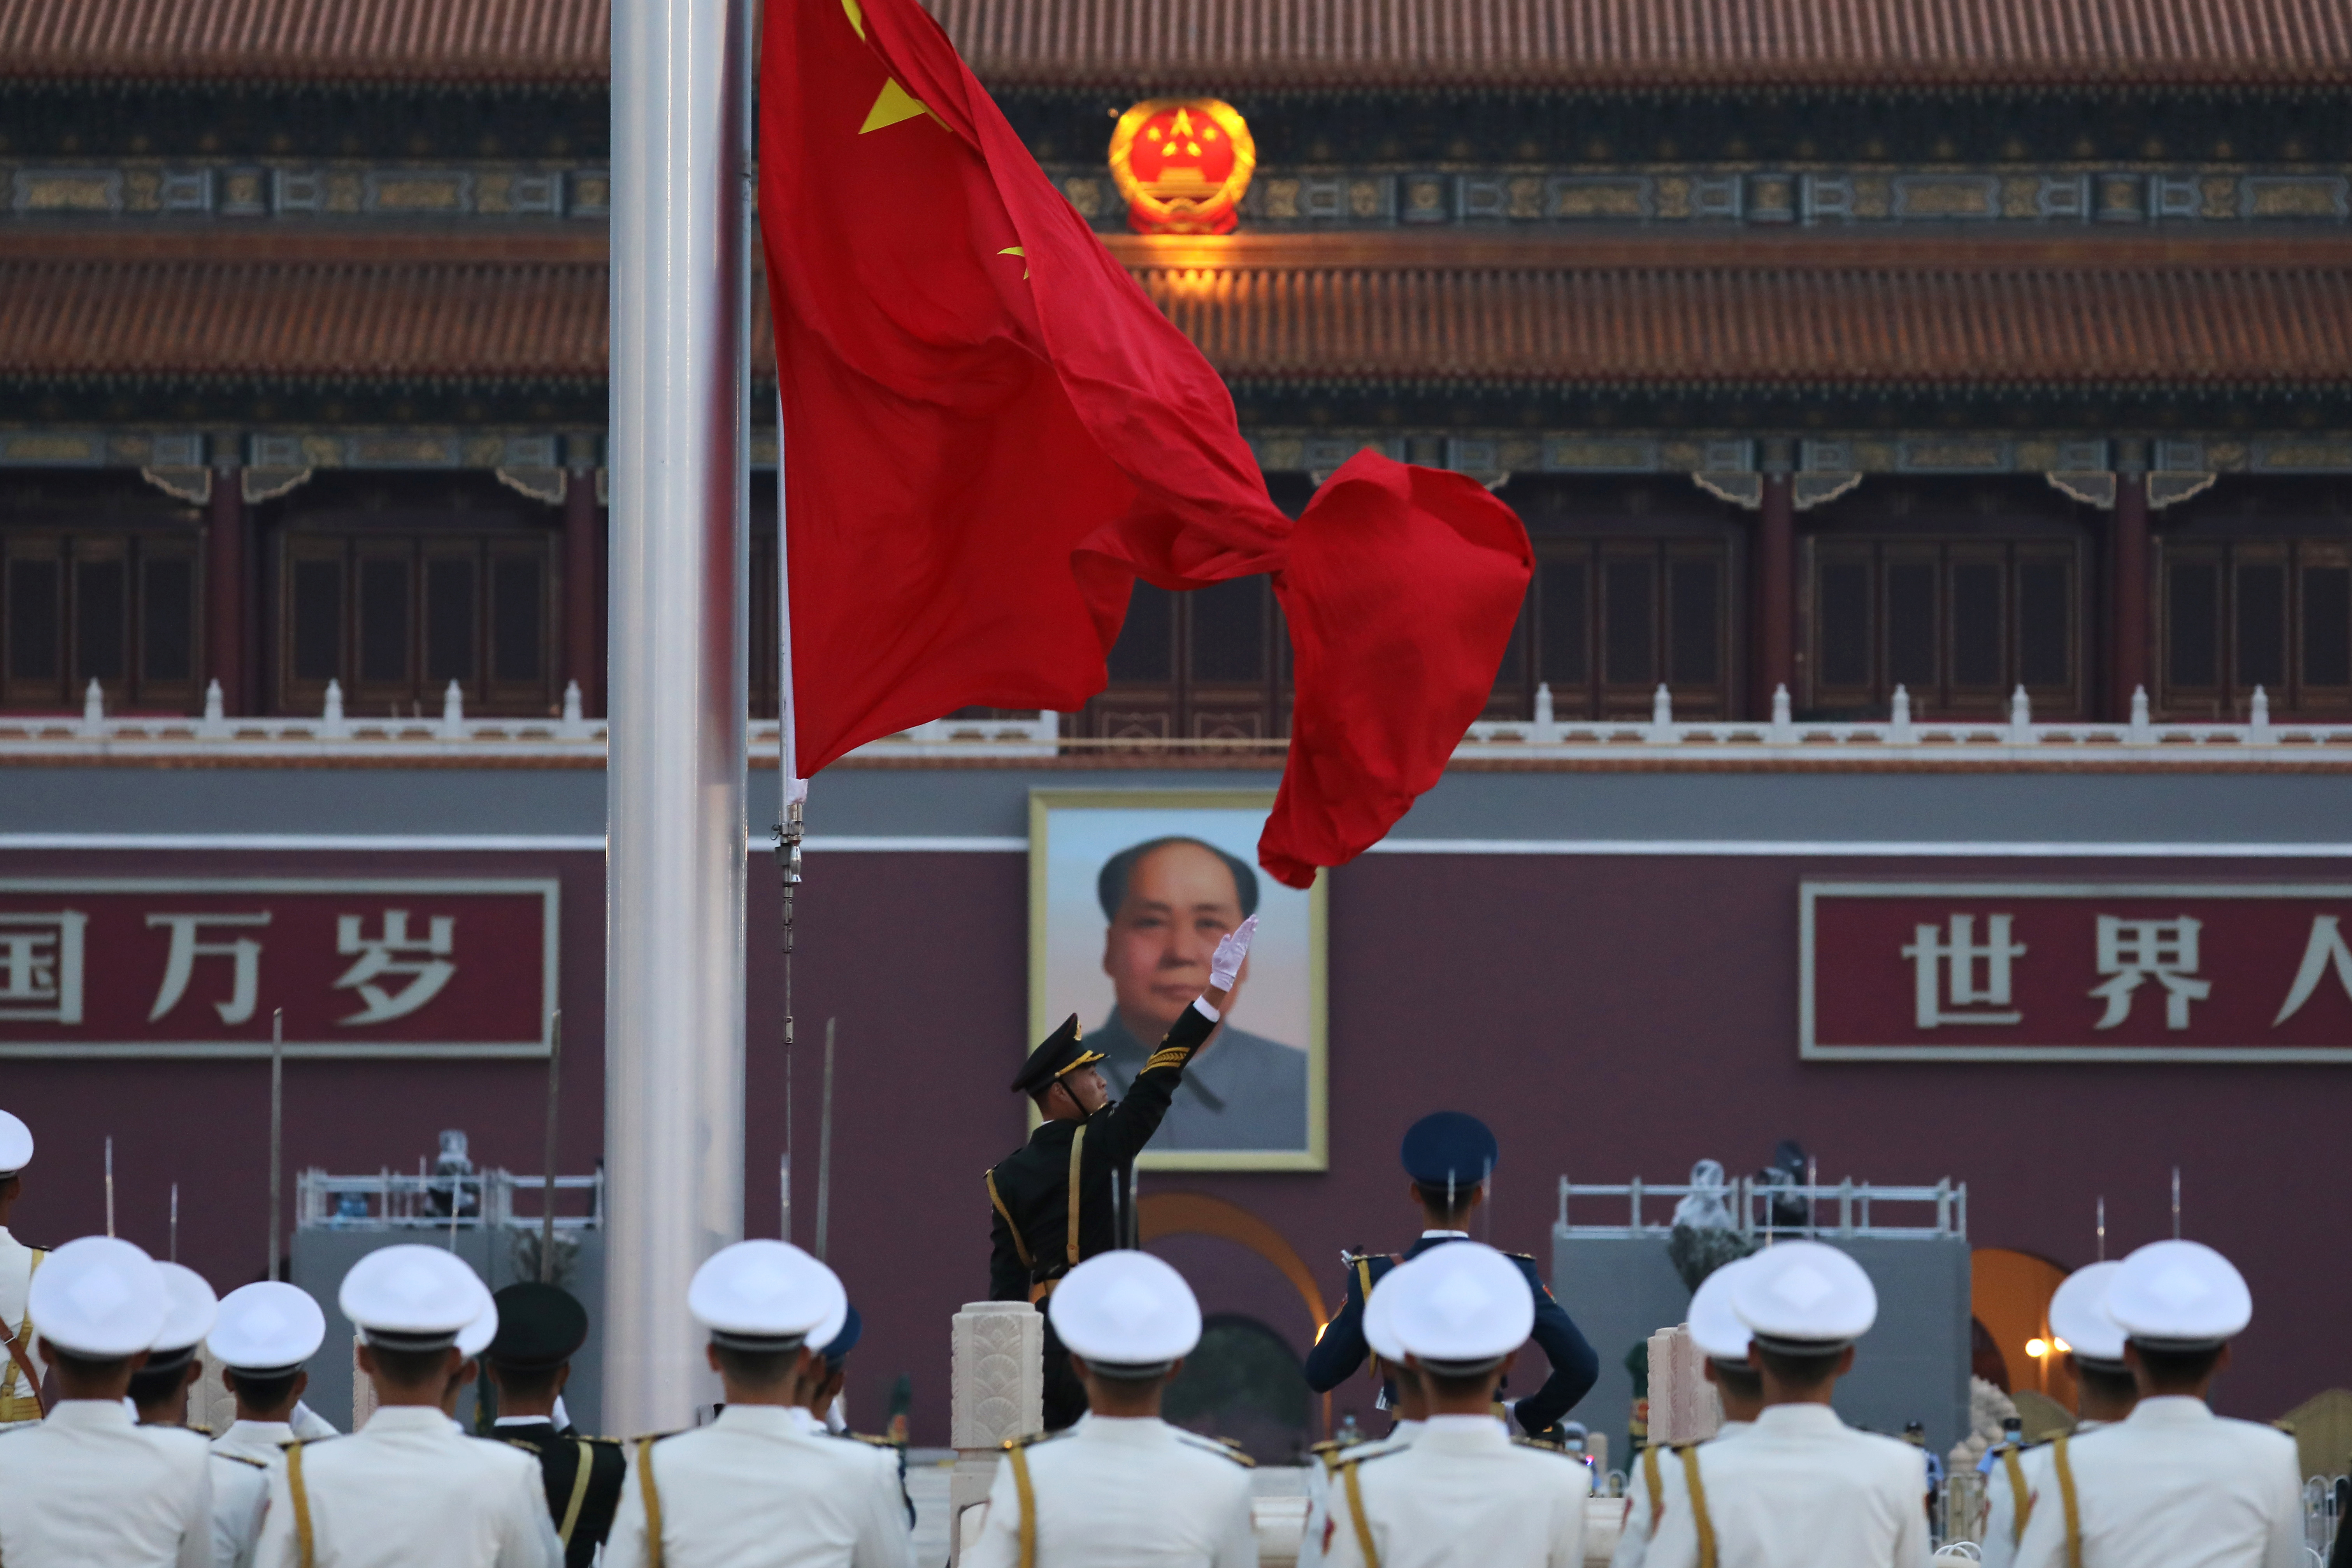 Flag-raising ceremony at Tiananmen Square, in Beijing